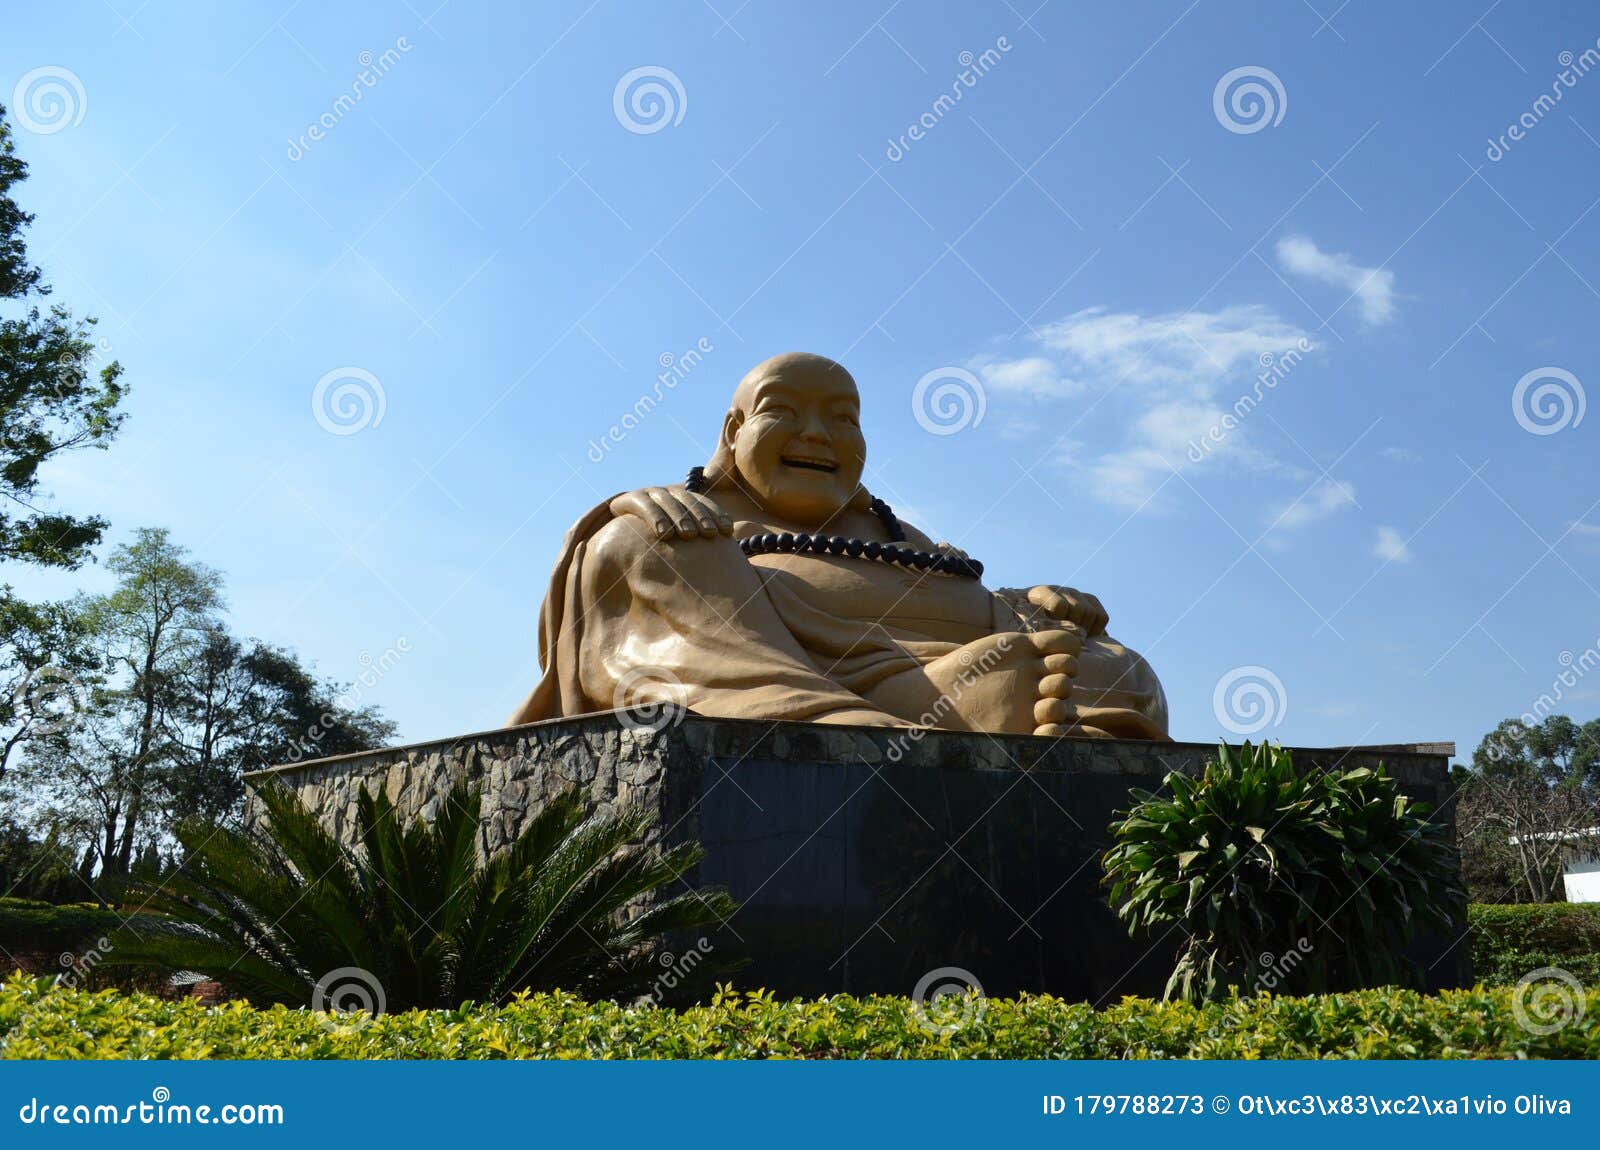 statue in the buddhist temple of iguassu falls, brazil.